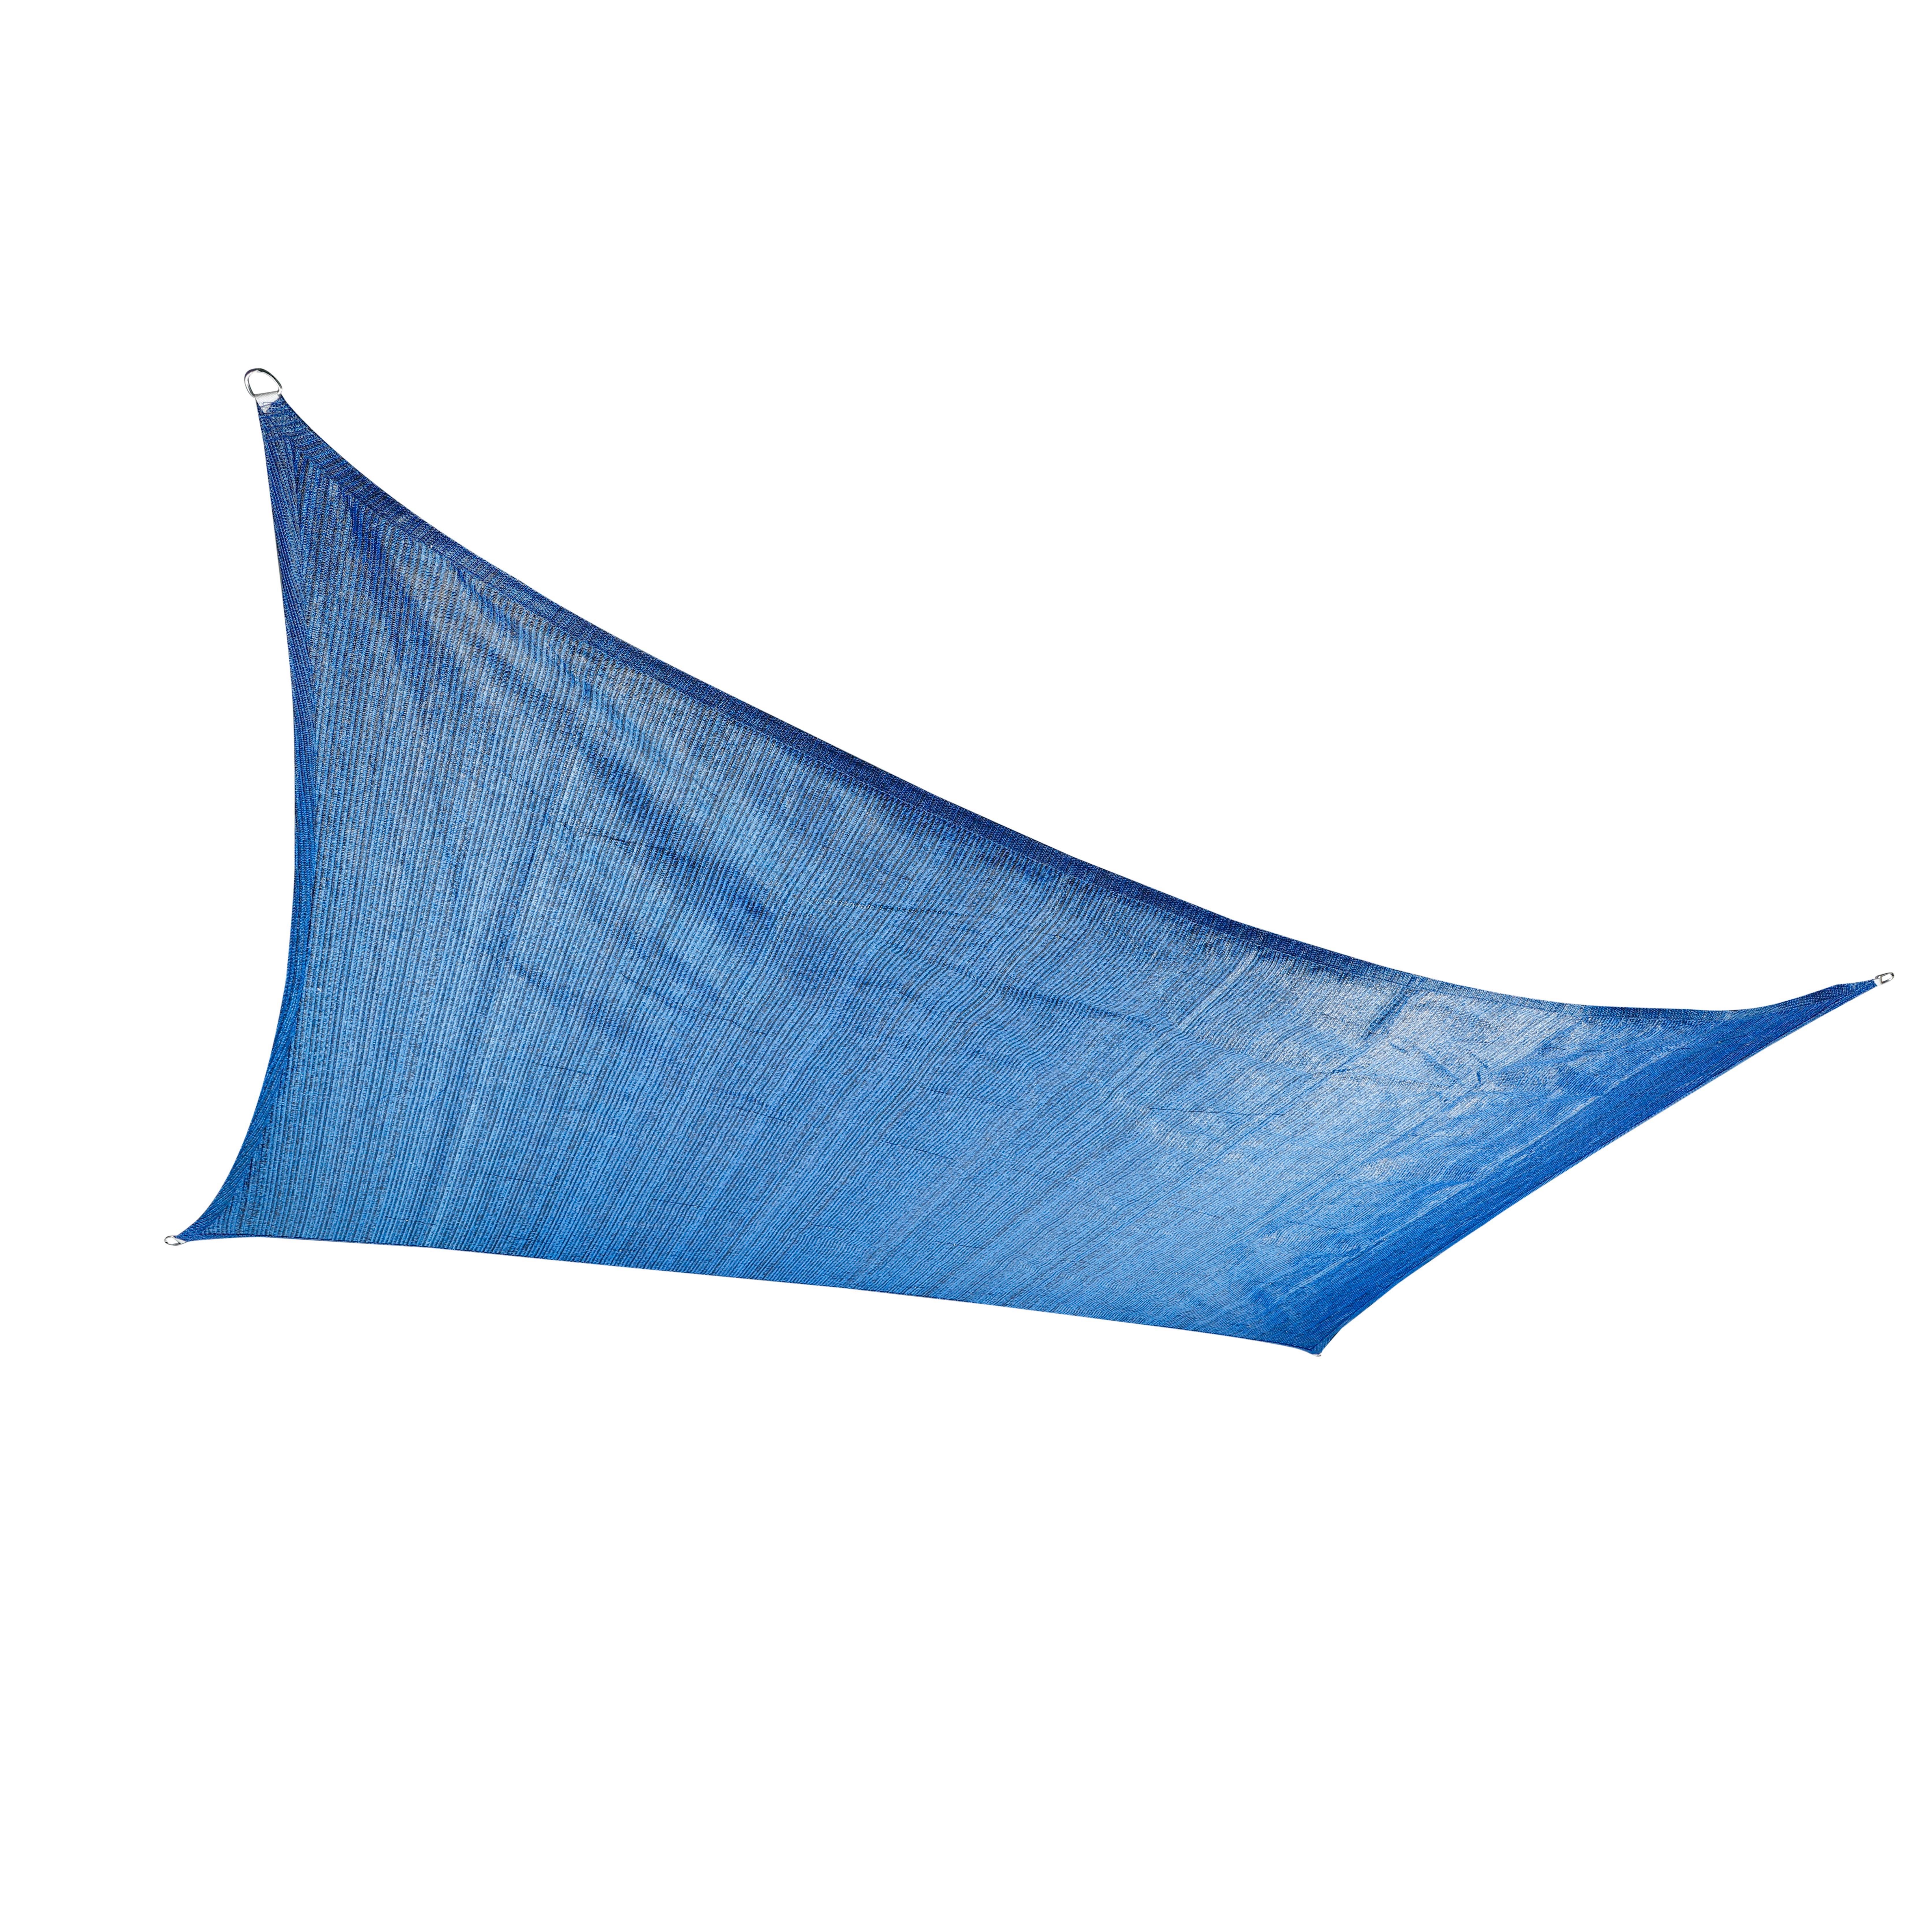 Sonnensegel Rechteck 2x3 M - Blau/Schwarz, MODERN, Textil/Metall (200/300cm)